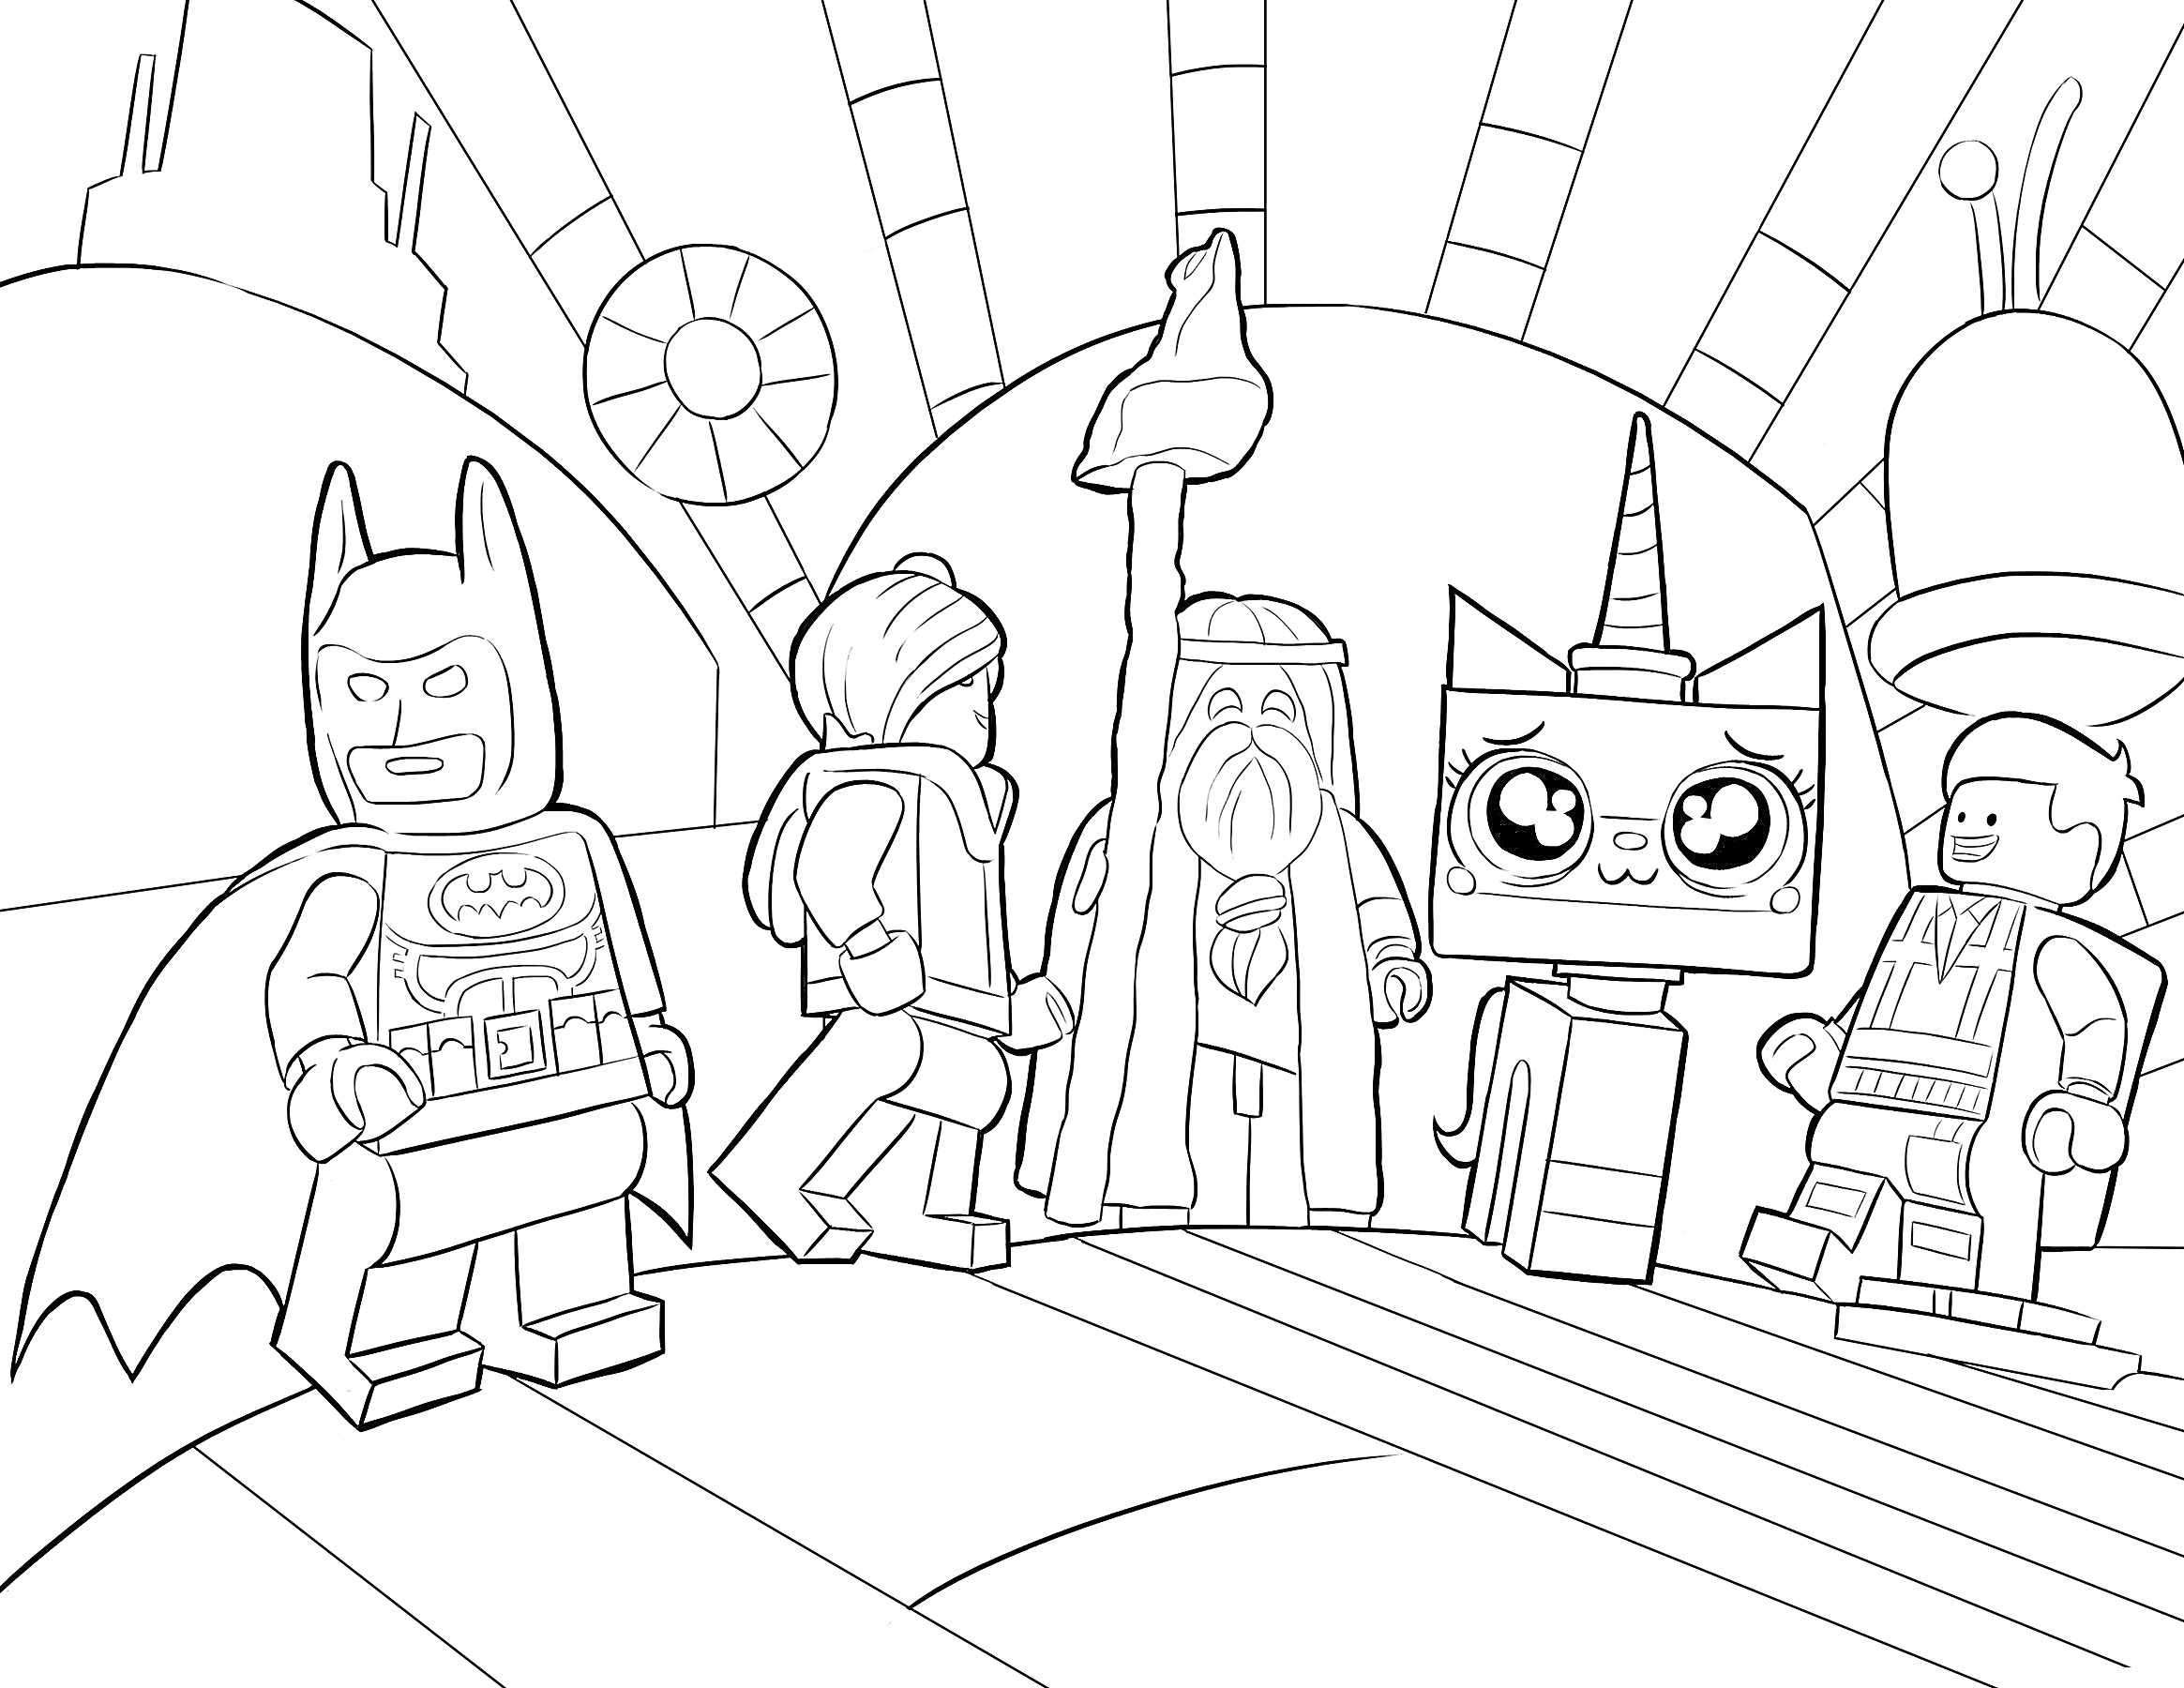 Группа Лего персонажей (Бэтмен, Эммет, Витрувий, Единорог)